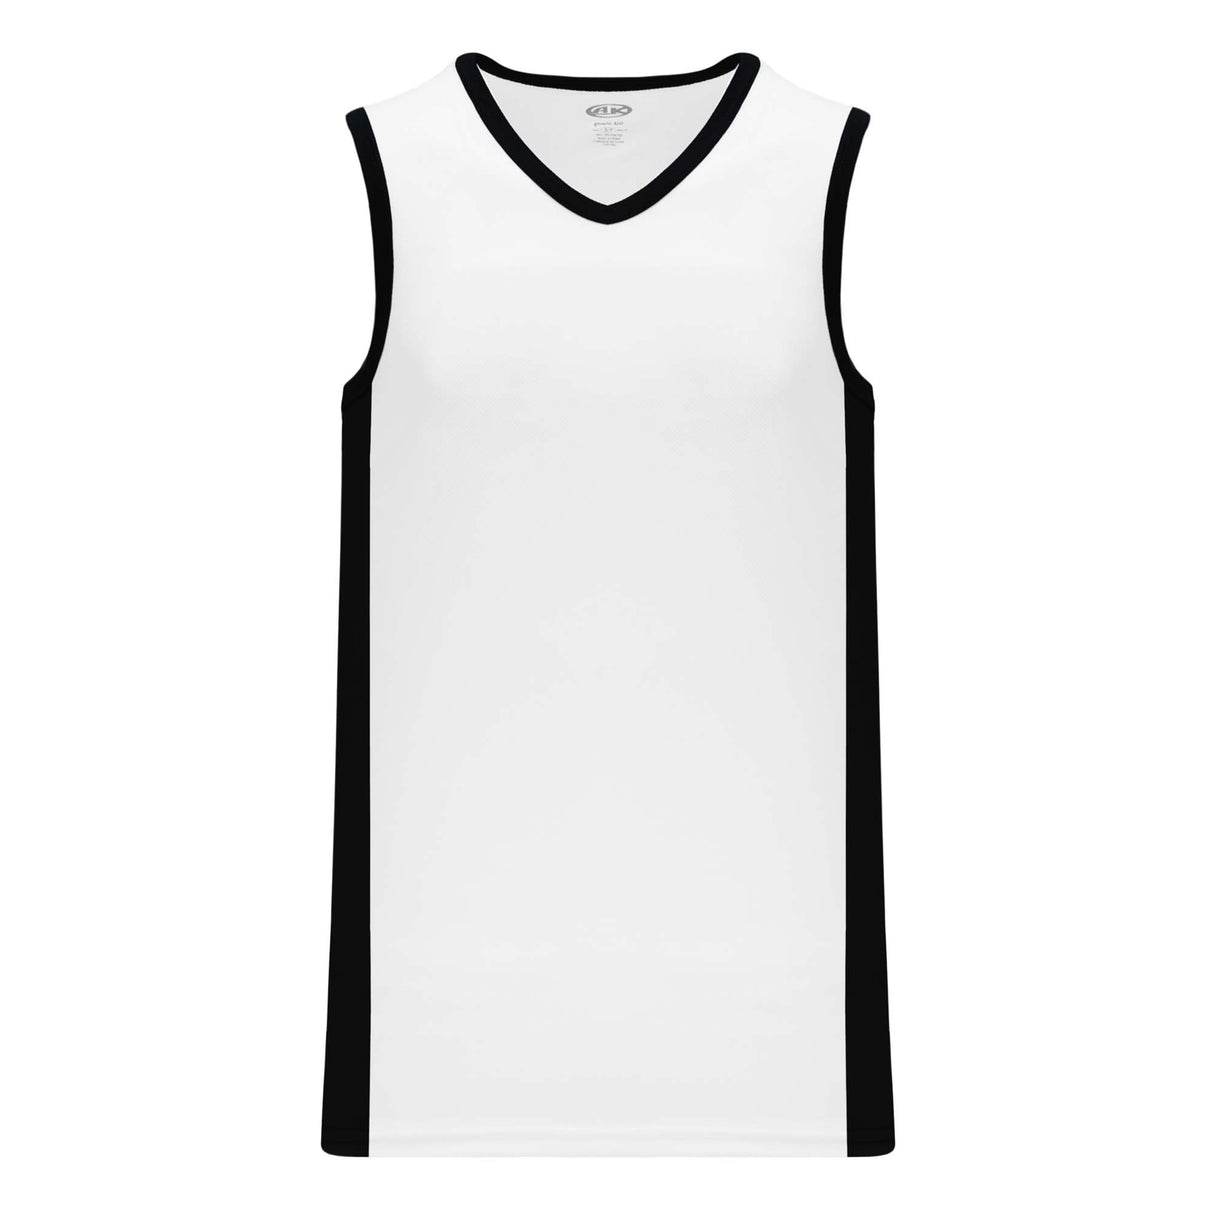 Athletic Knit B2115 basketball jersey